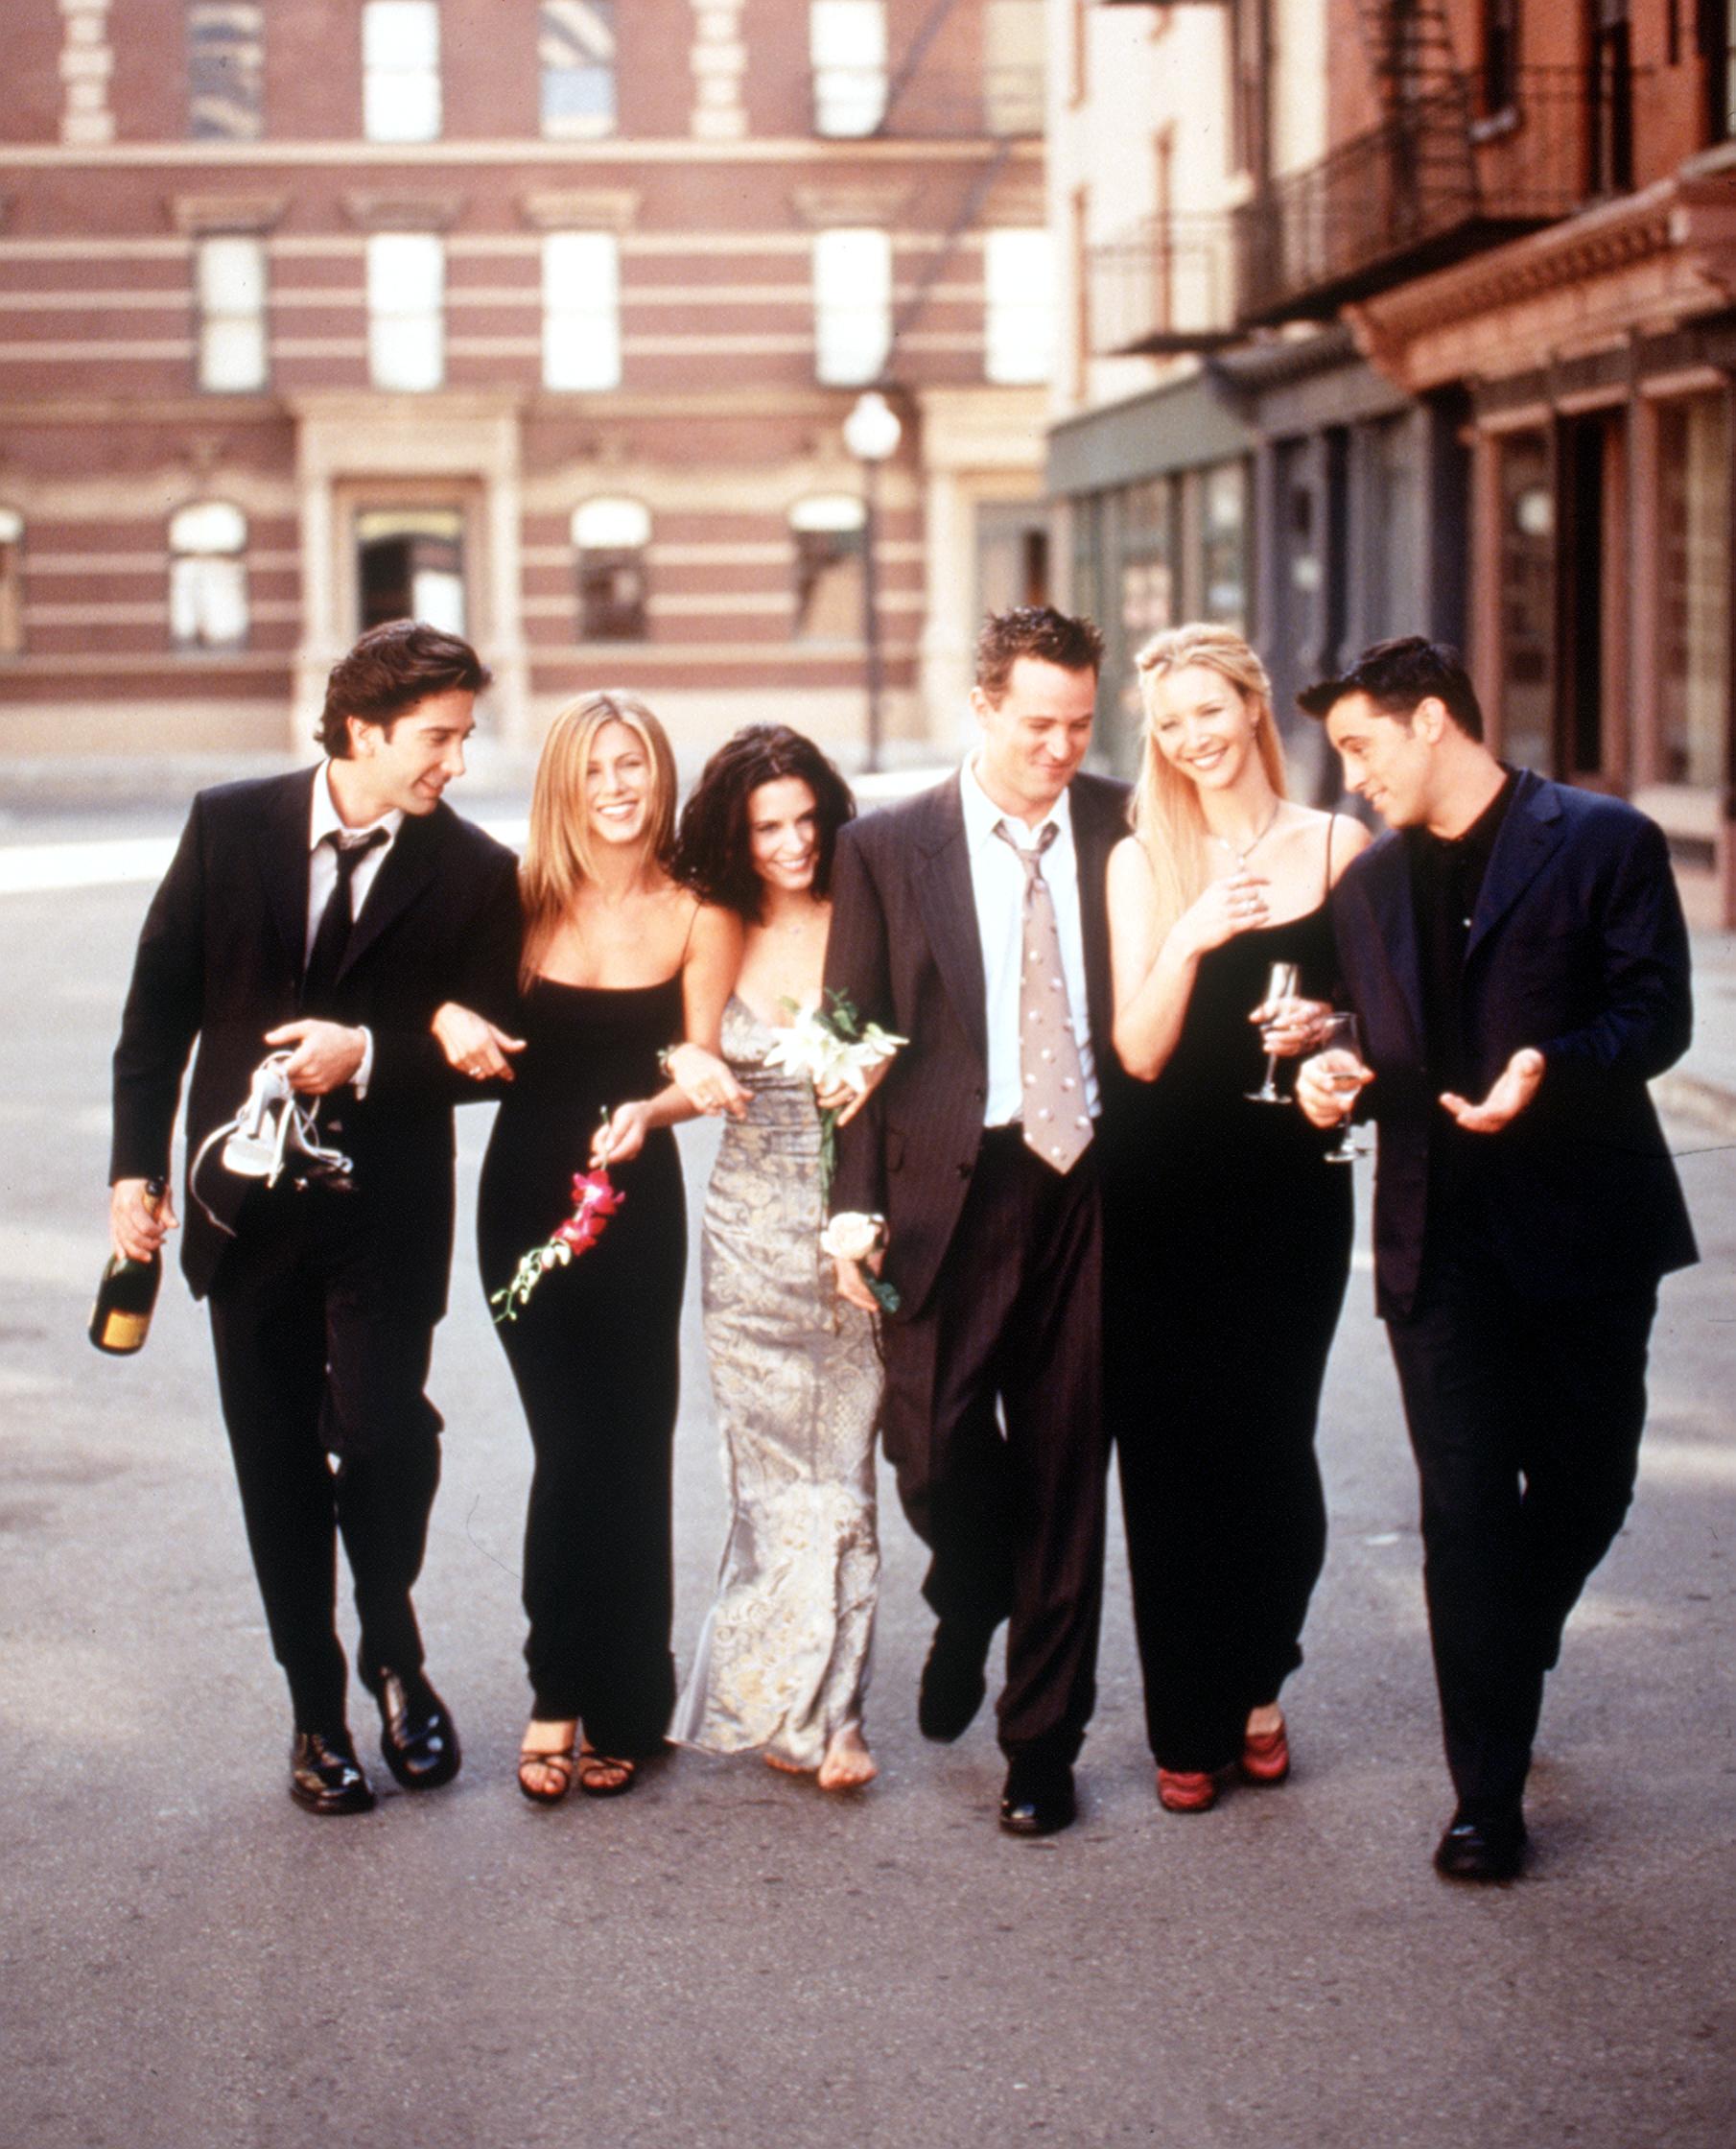 The cast of <i>Friends</i>. From left: David Schwimmer, Jennifer Aniston, Courtney Cox, Matthew Perry, Lisa Kudrow and Matt Leblanc.